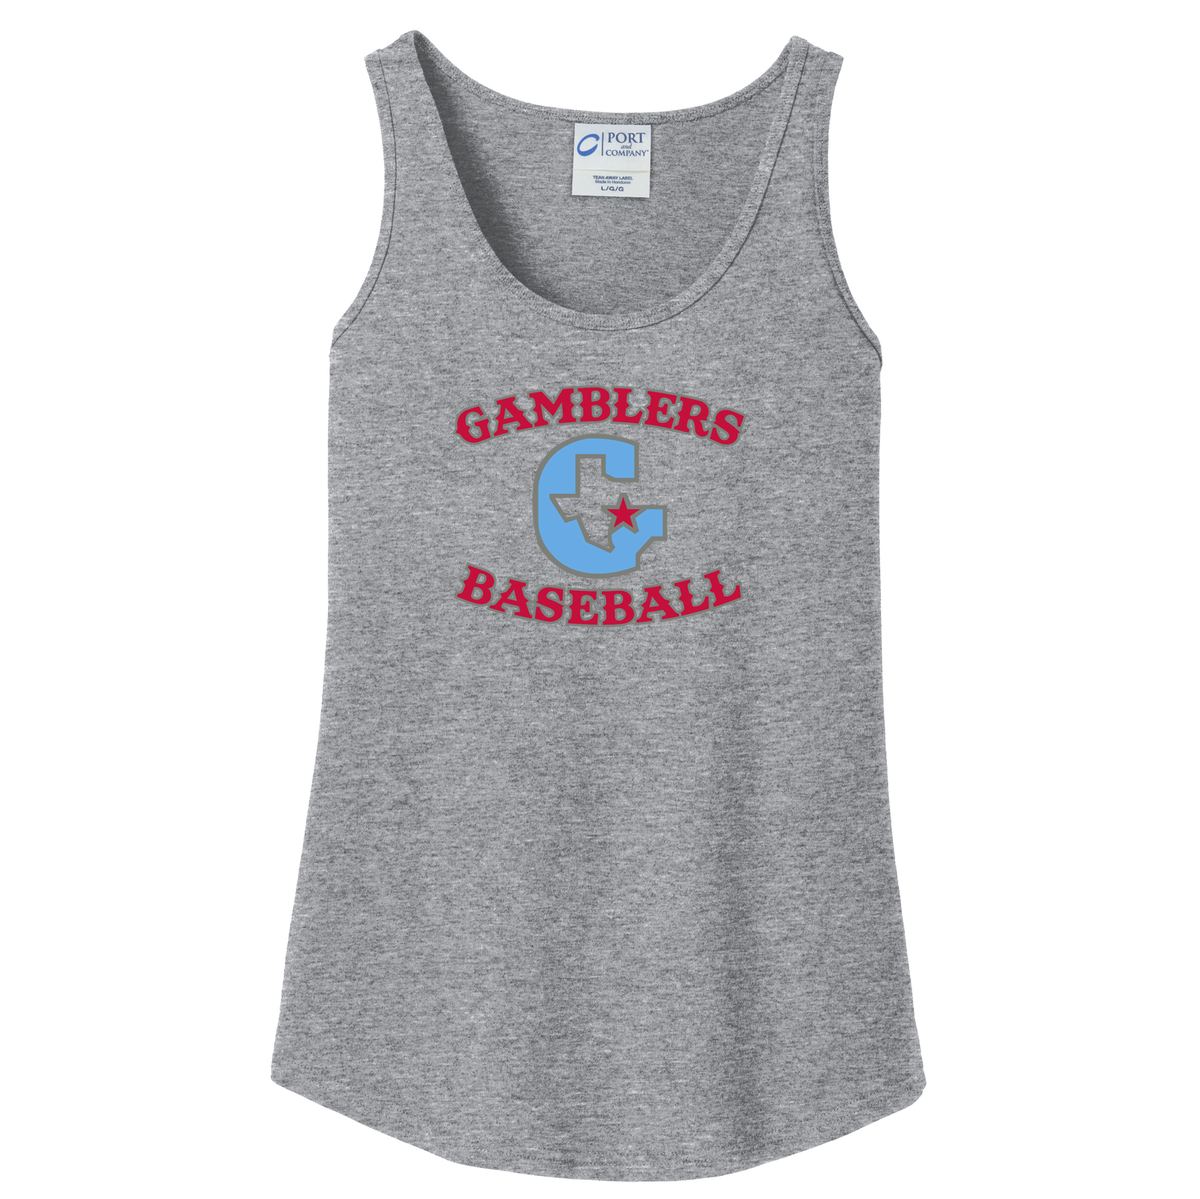 Gamblers Baseball  Women's Tank Top